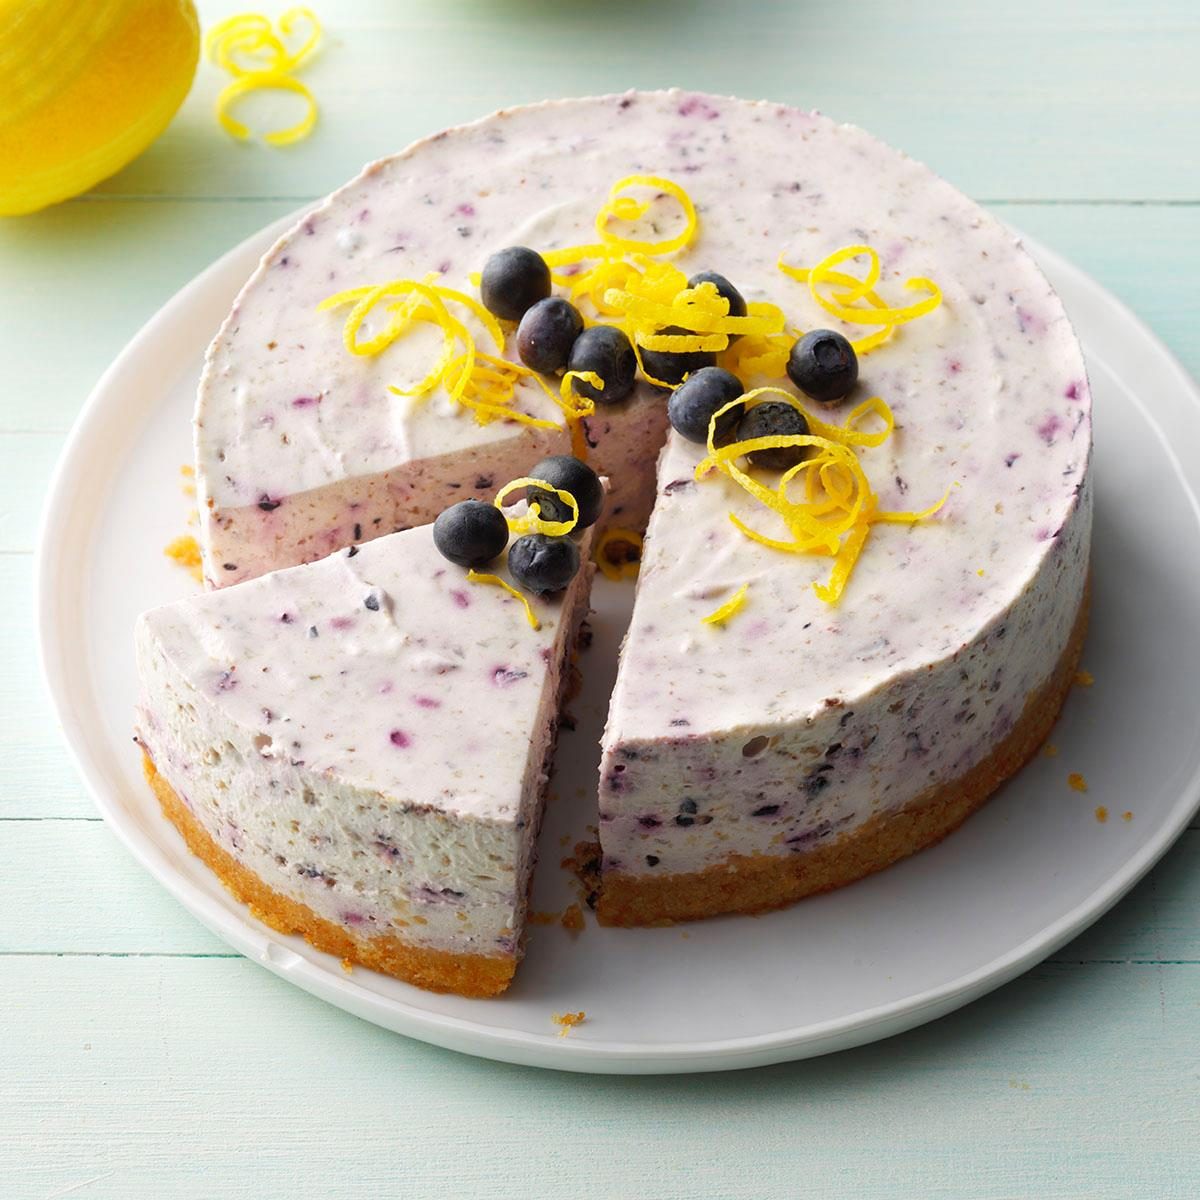 NoBake Blueberry Cheesecake Recipe How to Make It